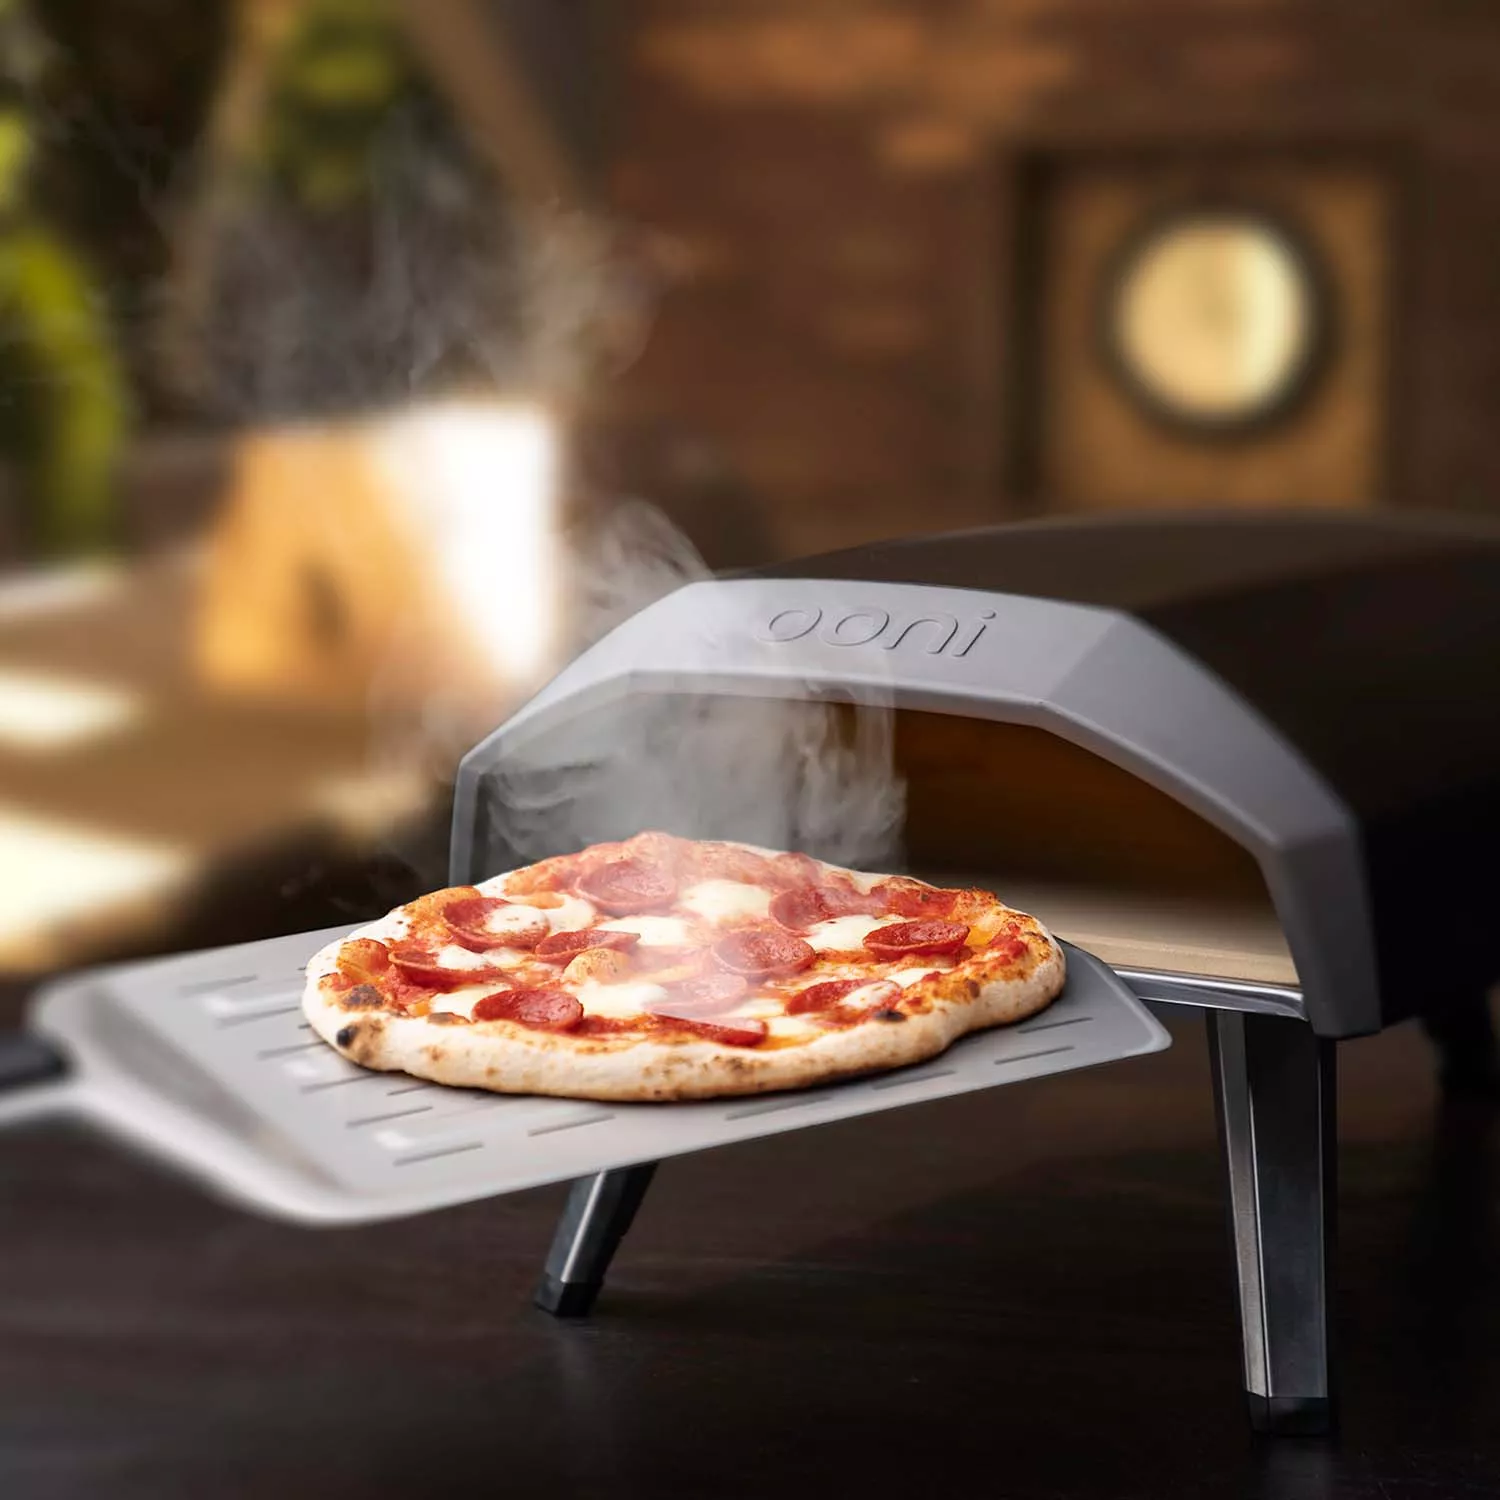 Ooni Koda 12 Pizza Oven Review